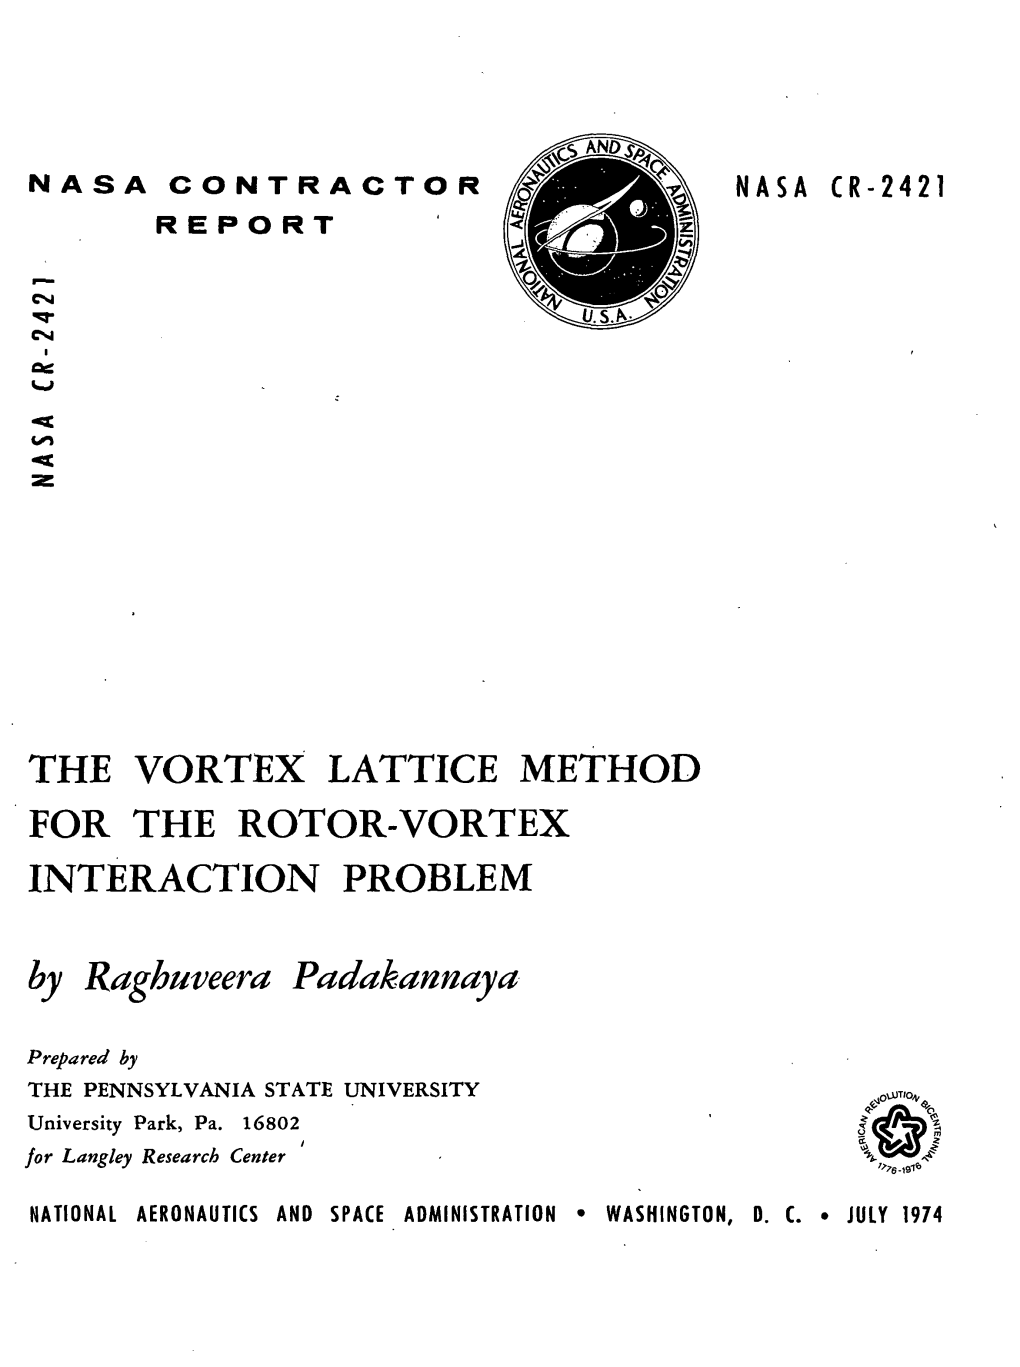 The Vortex Lattice Method . for the Rotor-Vortex Interaction Problem